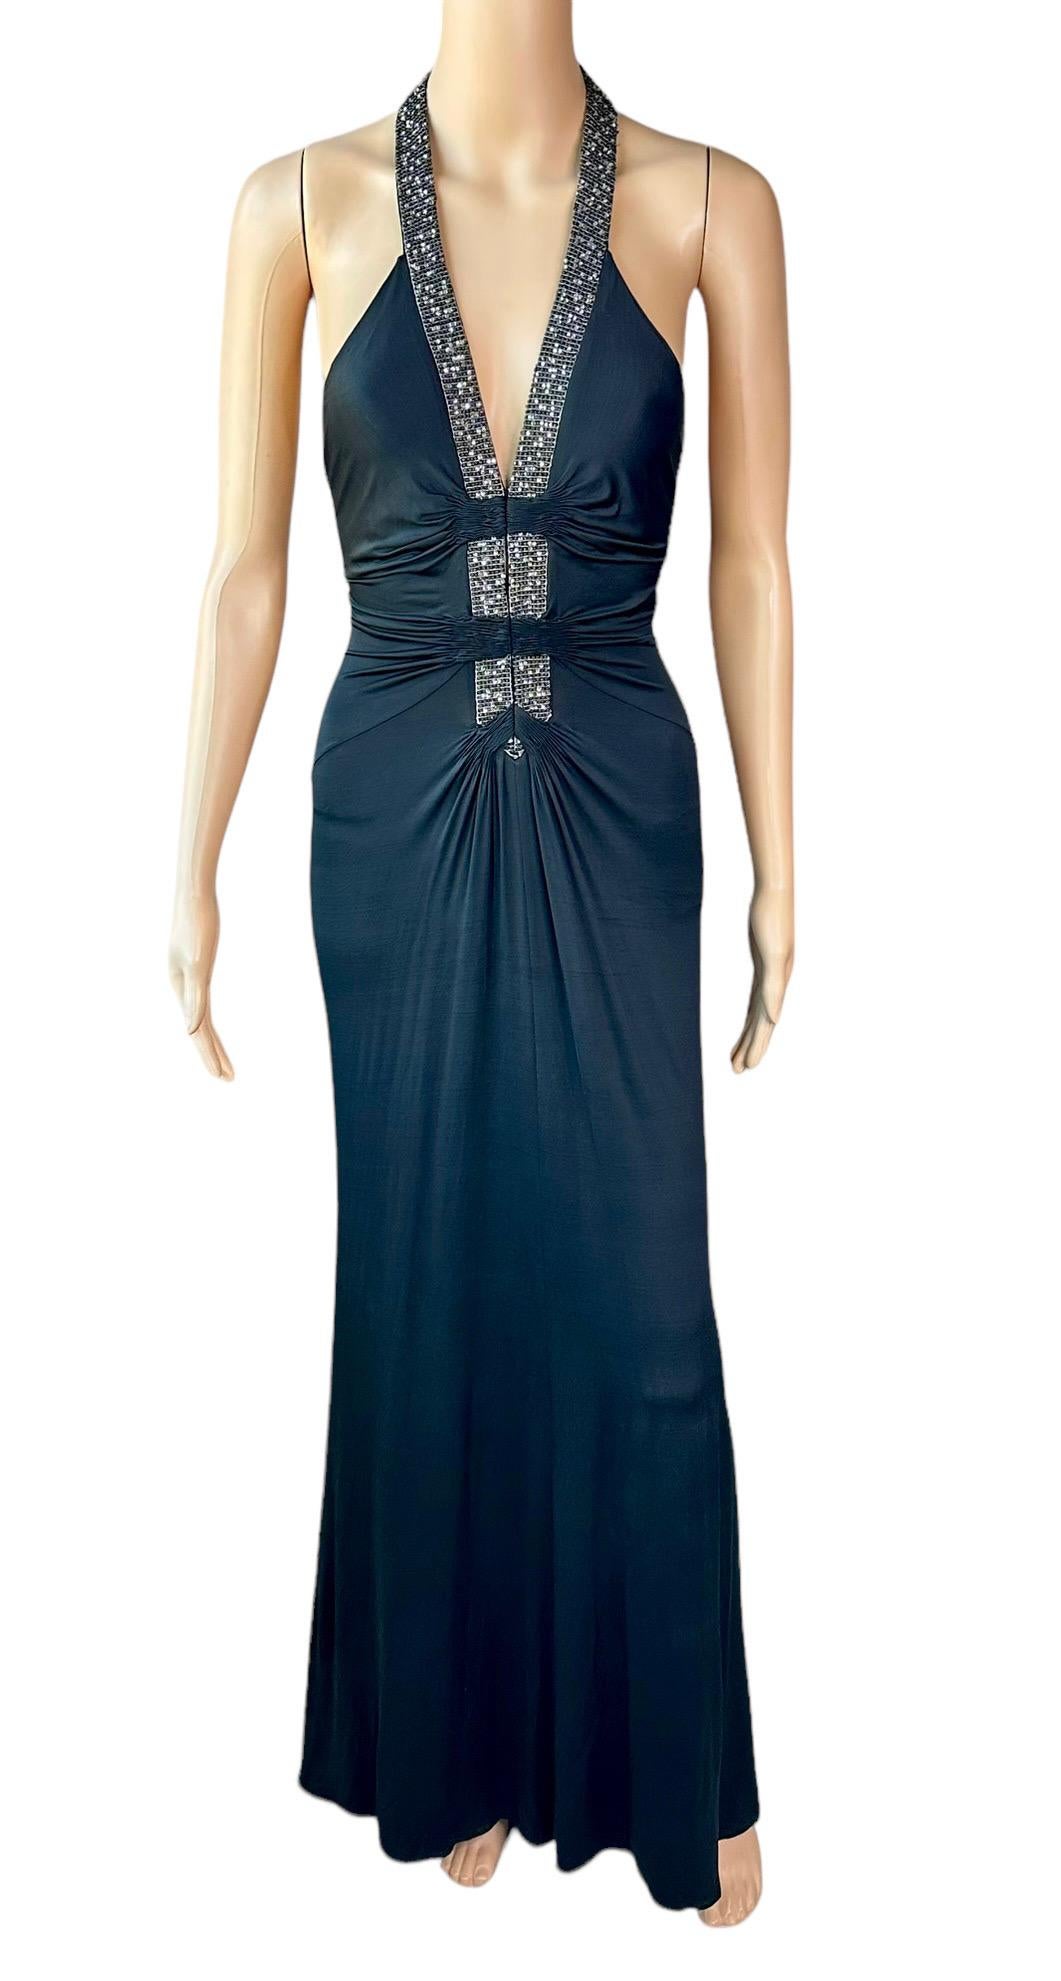 Women's Roberto Cavalli S/S 2005 Embellished Plunging Neckline Black Maxi Evening Dress For Sale